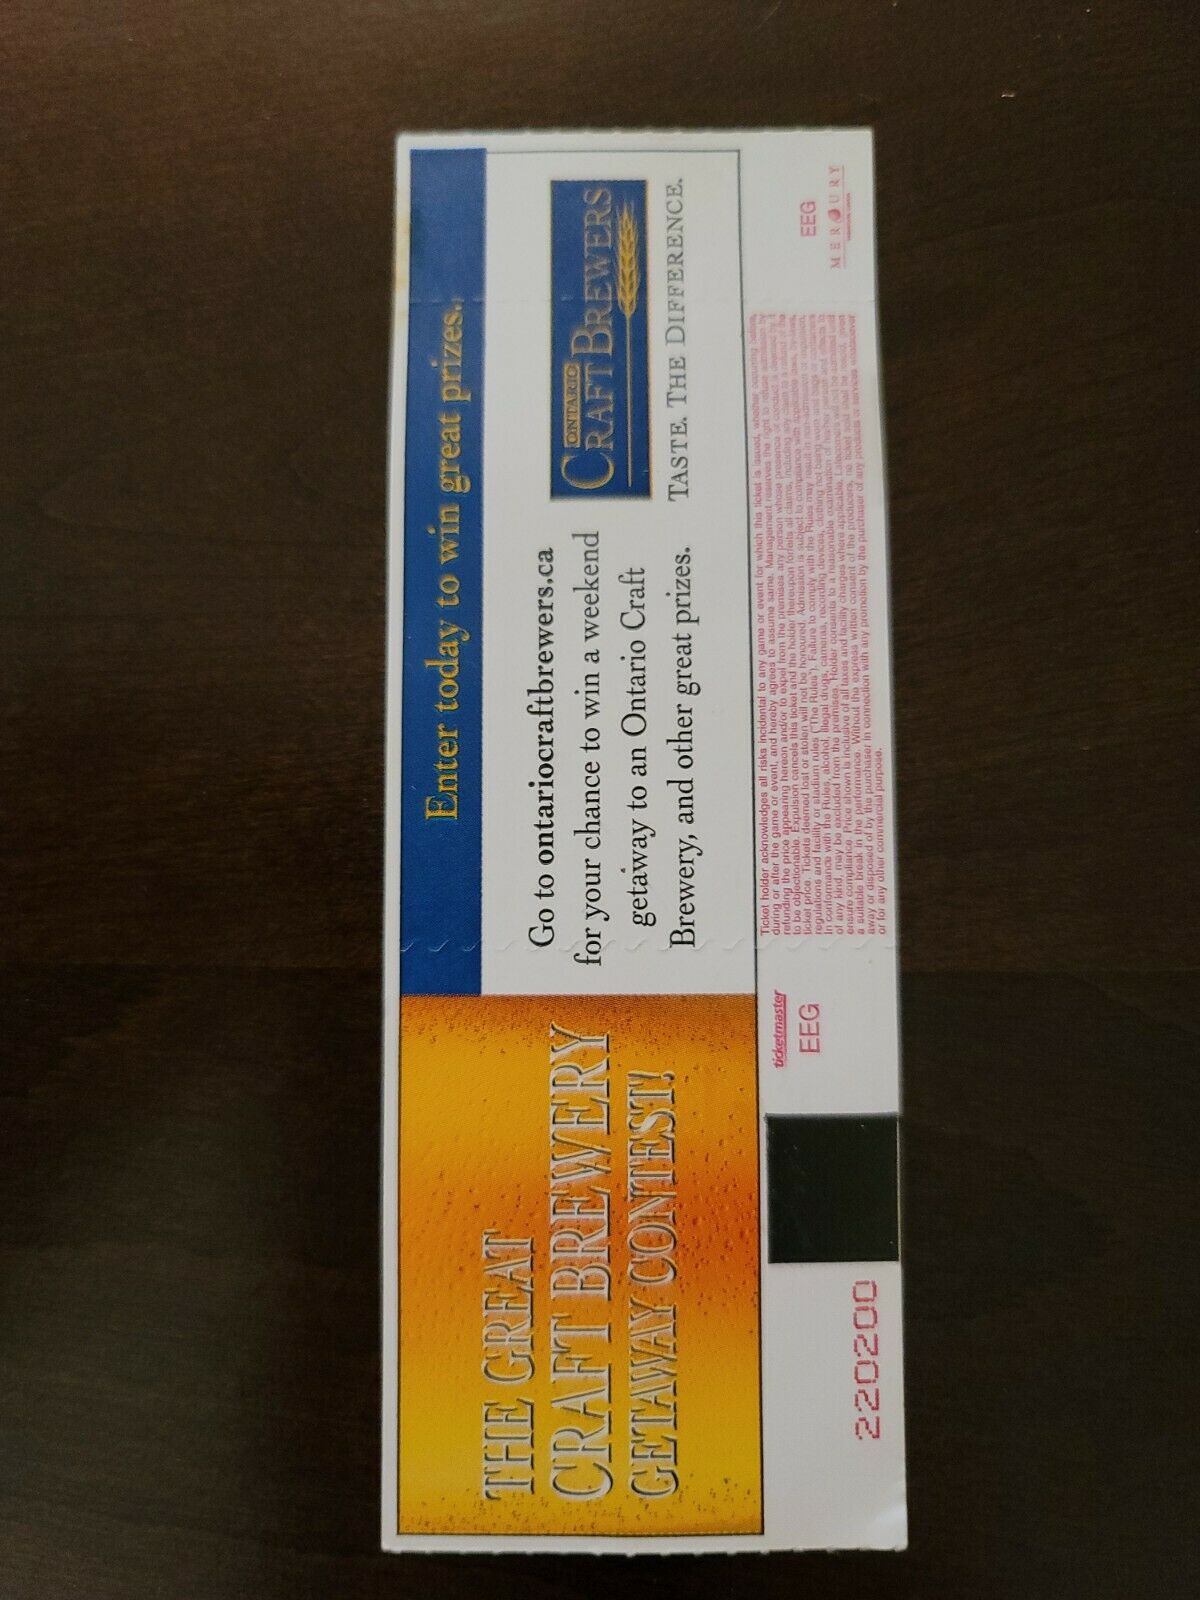 KMFDM 2005, Toronto Phoenix Theater Original Concert Ticket Stub